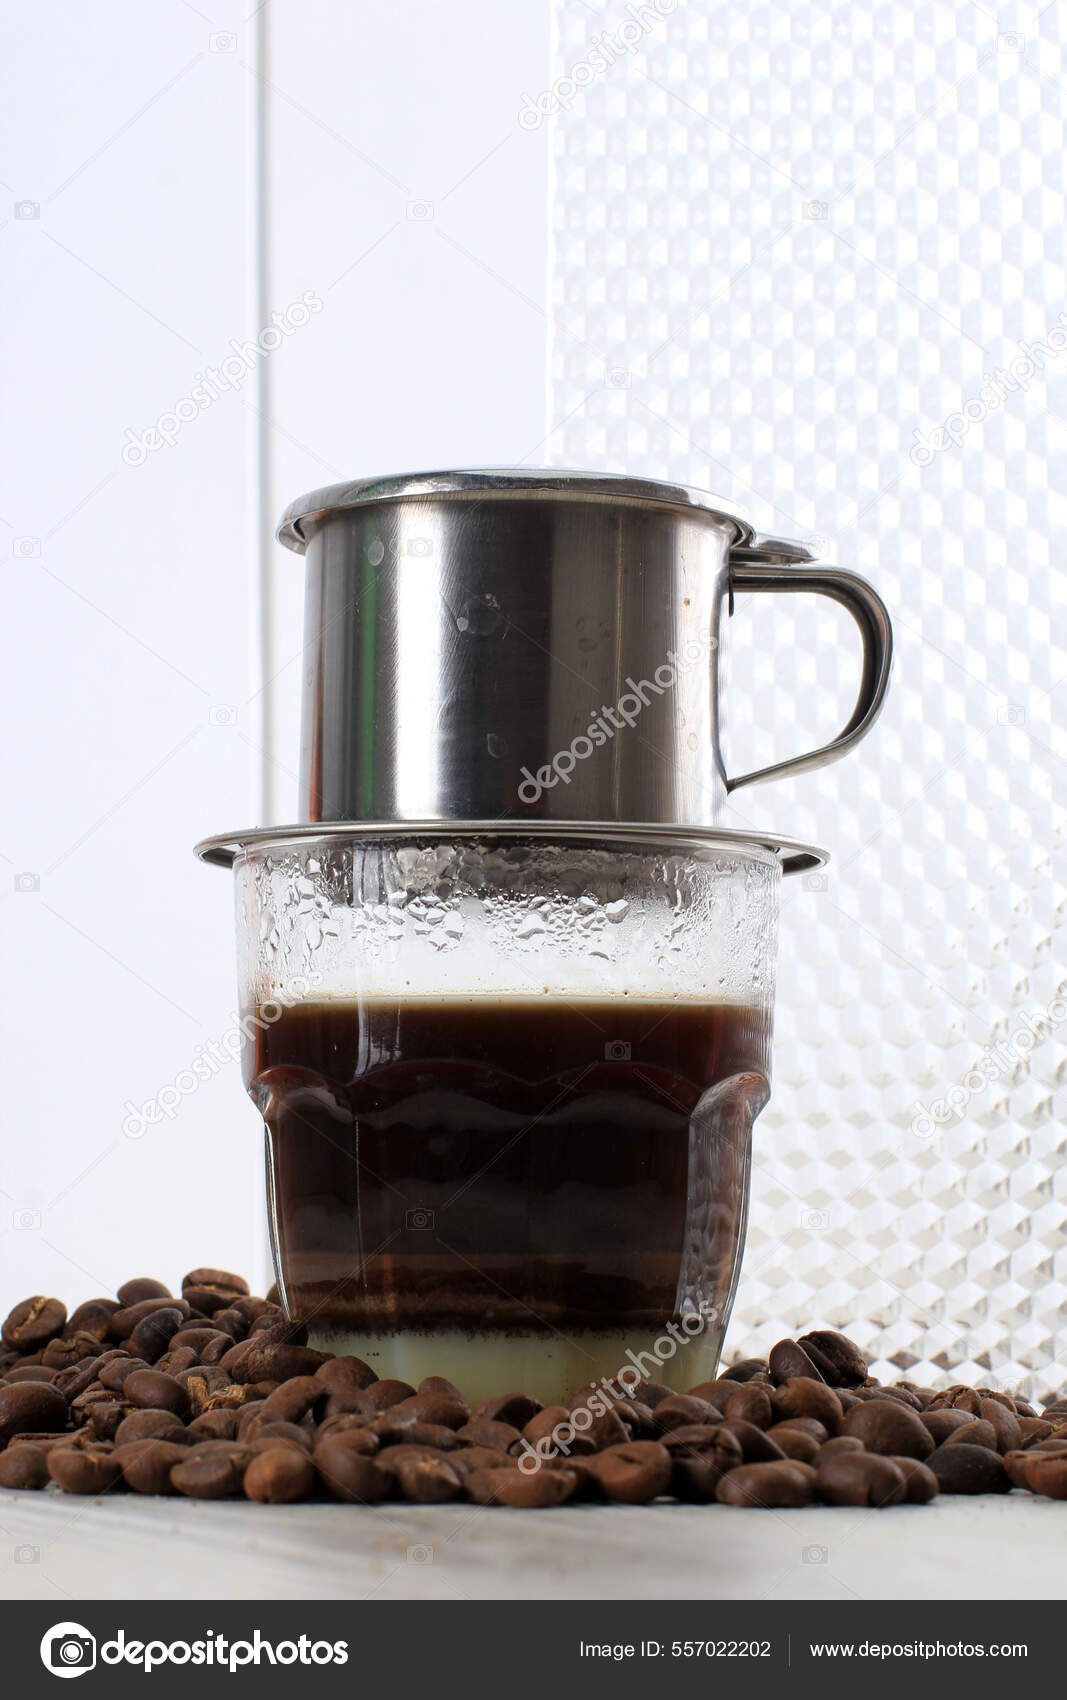 https://st.depositphotos.com/62710562/55702/i/1600/depositphotos_557022202-stock-photo-vietnamese-coffee-condensed-milk-glass.jpg